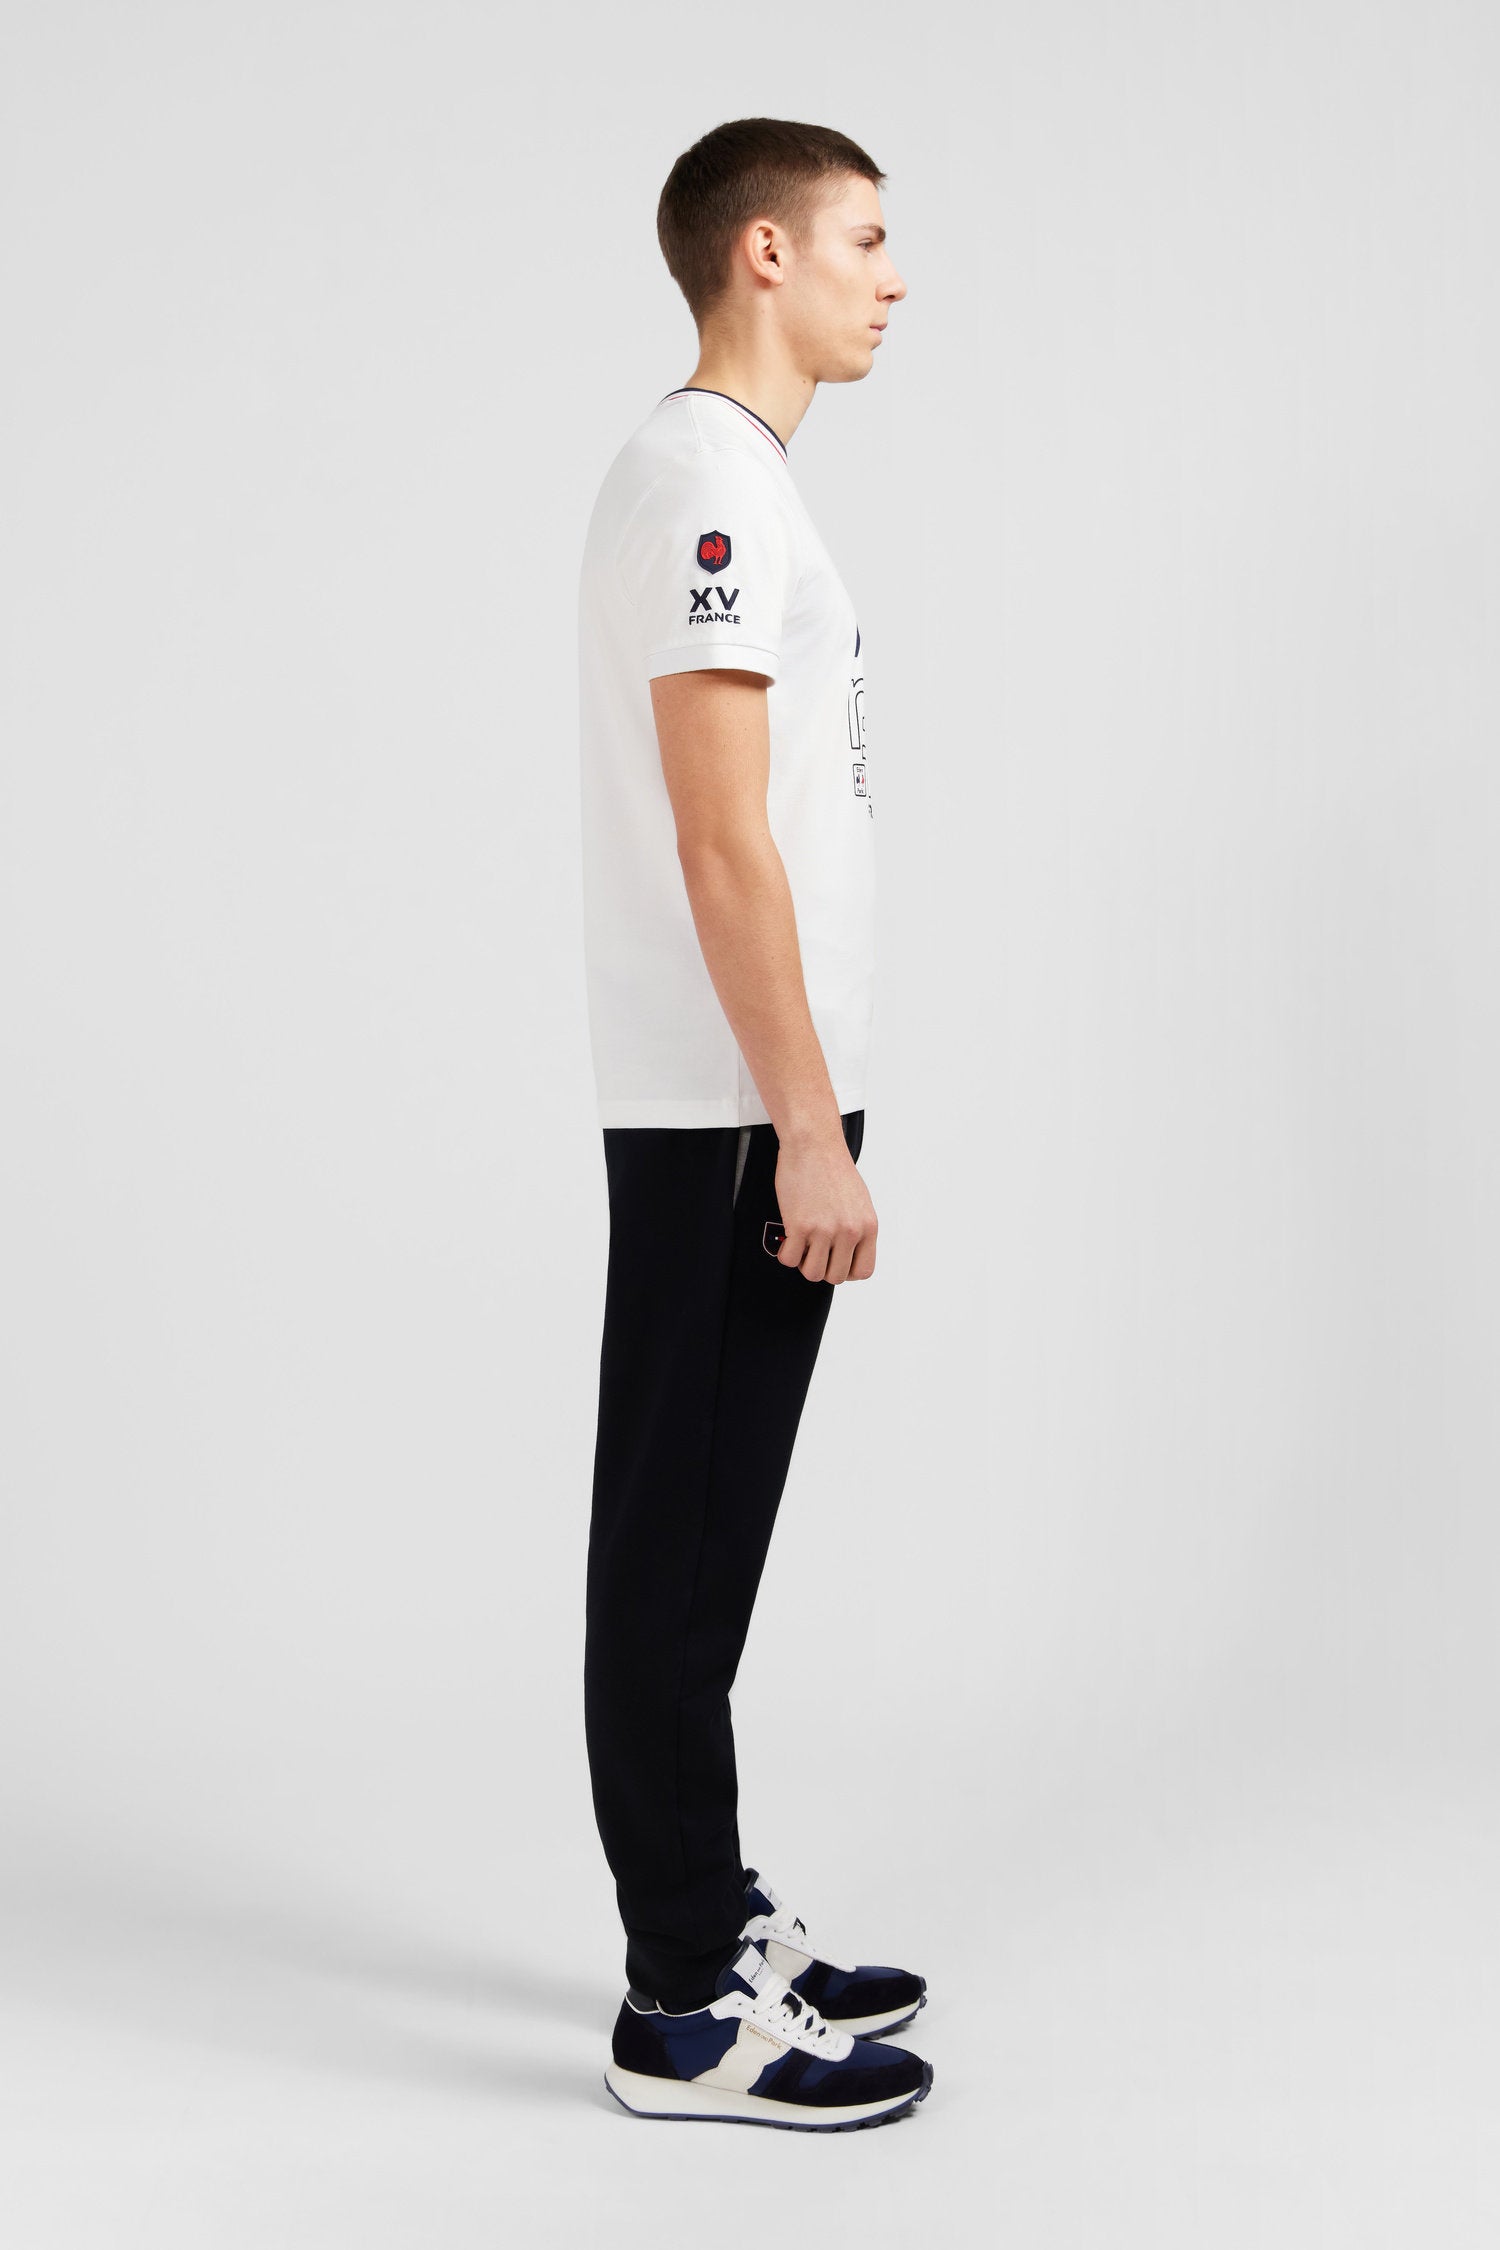 XV De France White Printed Short-Sleeved T-Shirt_E24MAITC0057_BC_04